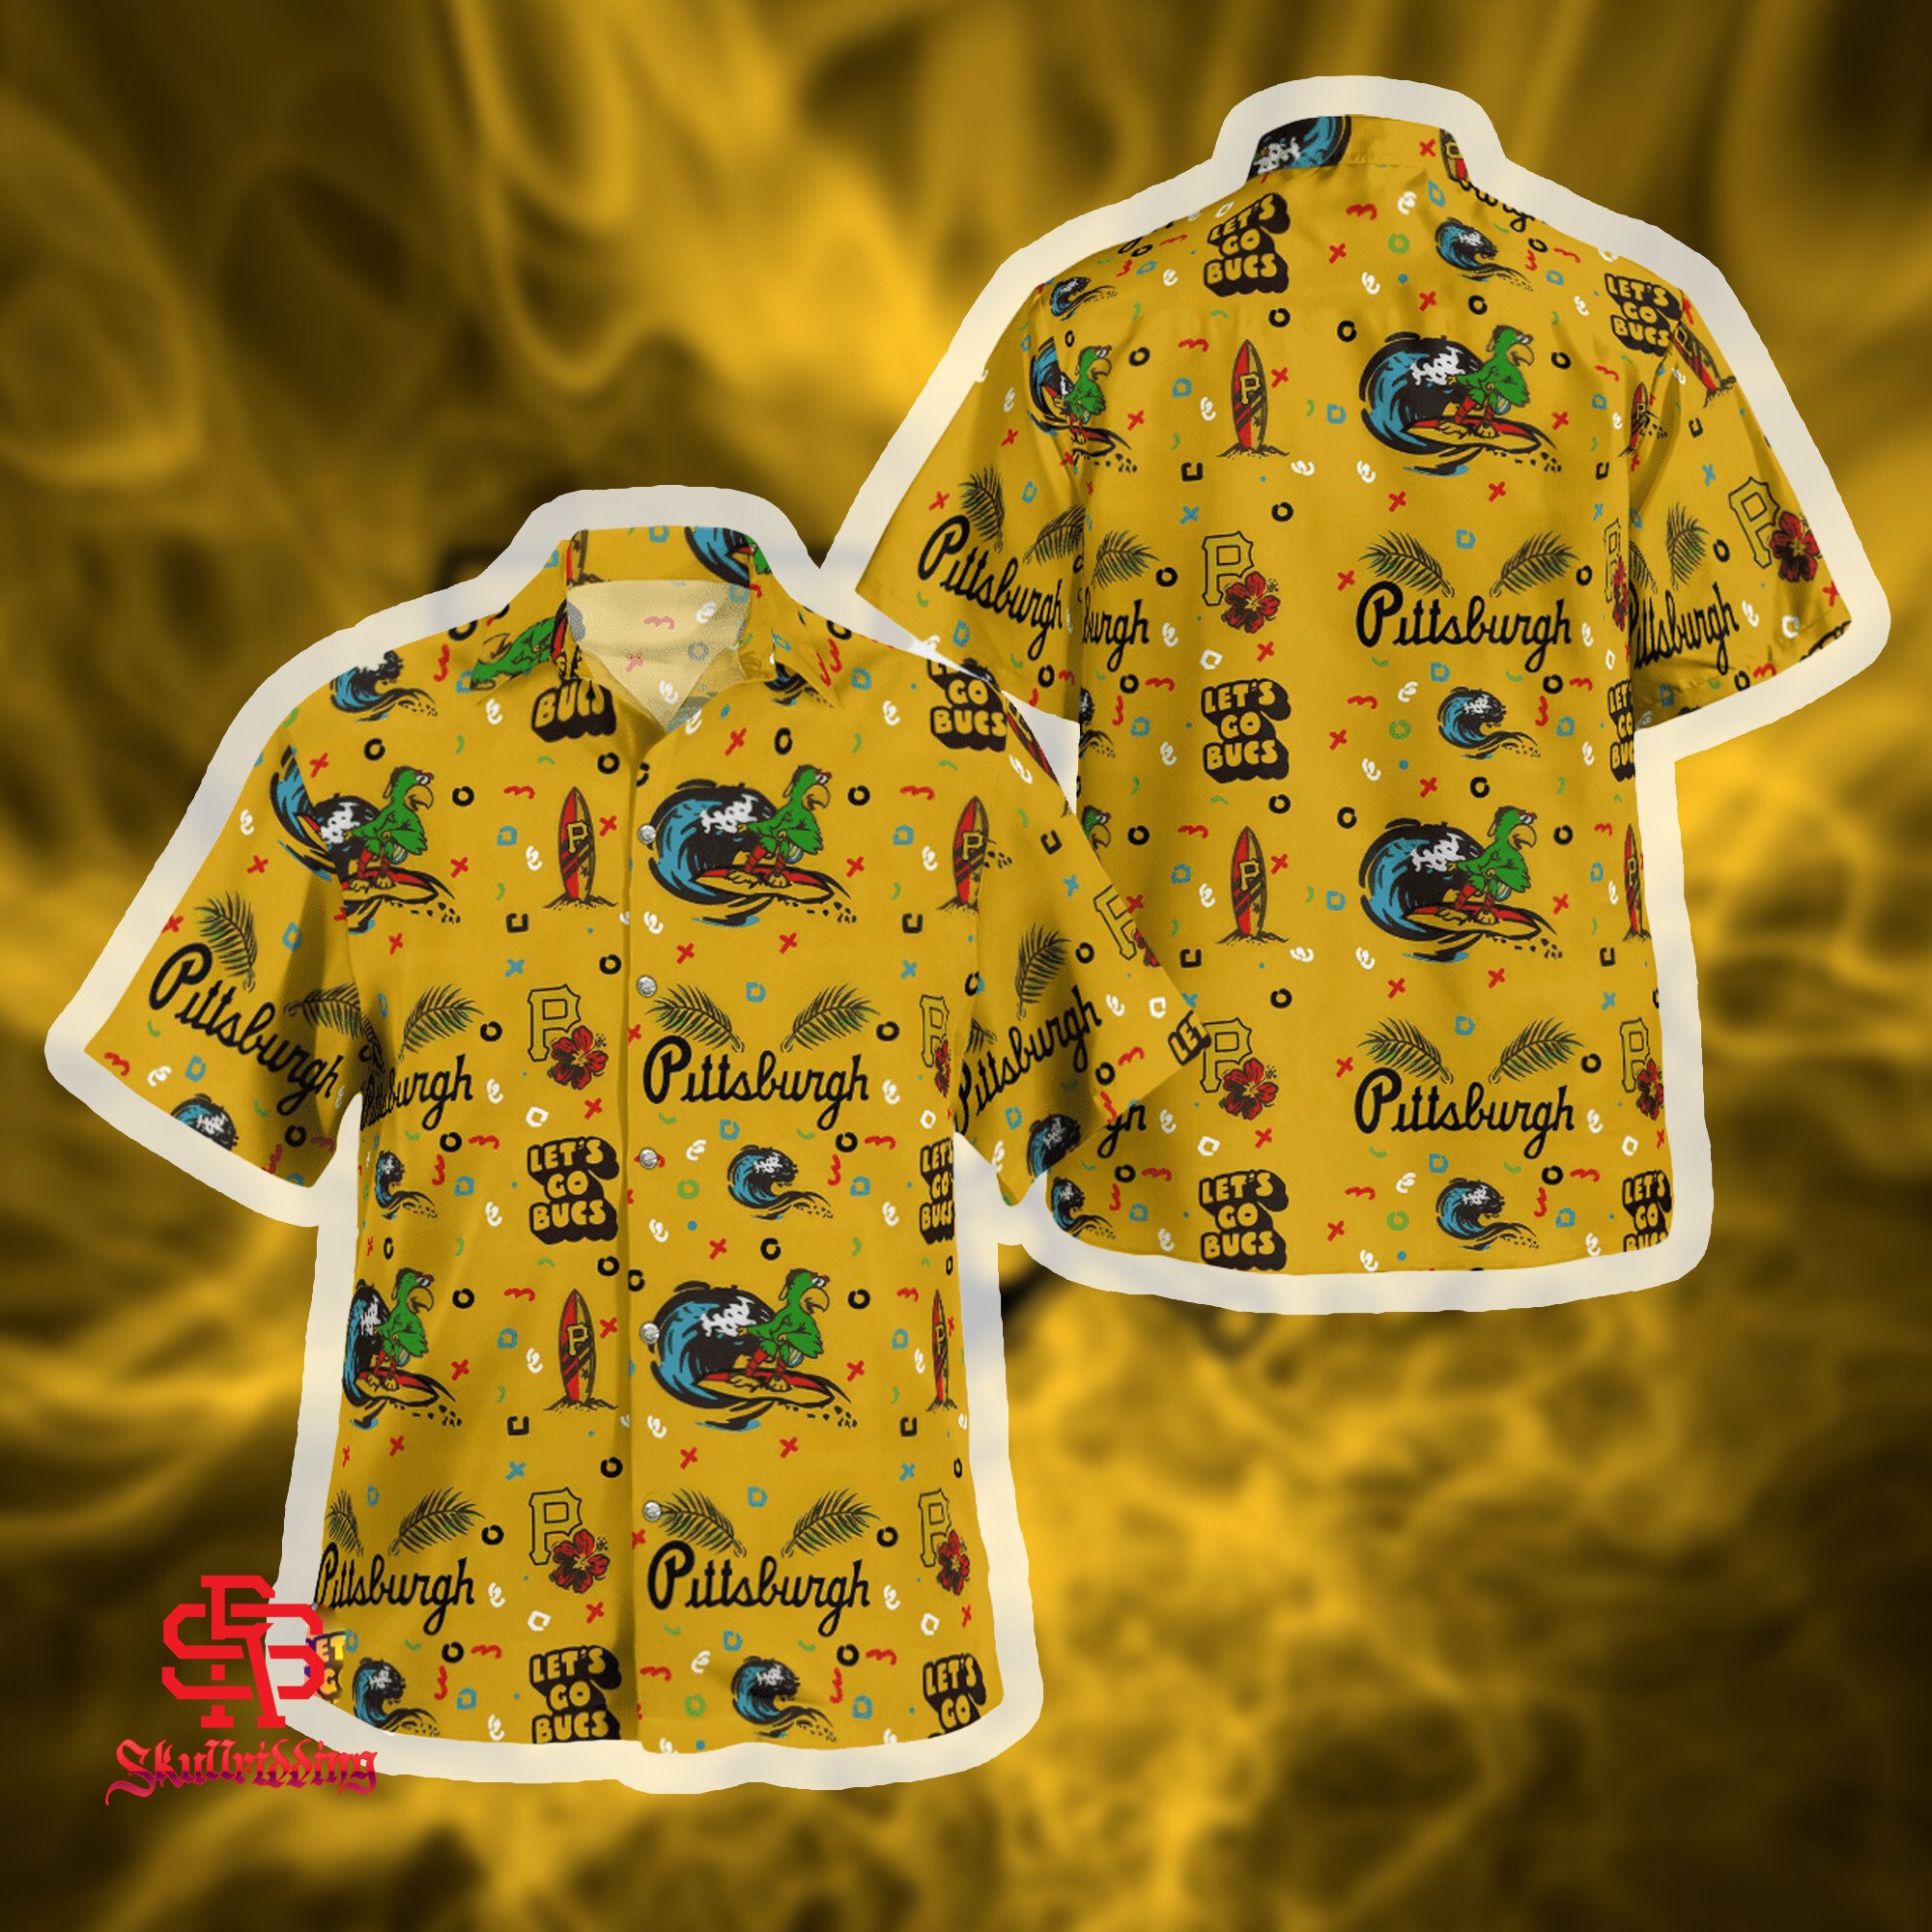 Pirates Hawaiian Shirt Night 2023 - Lelemoon